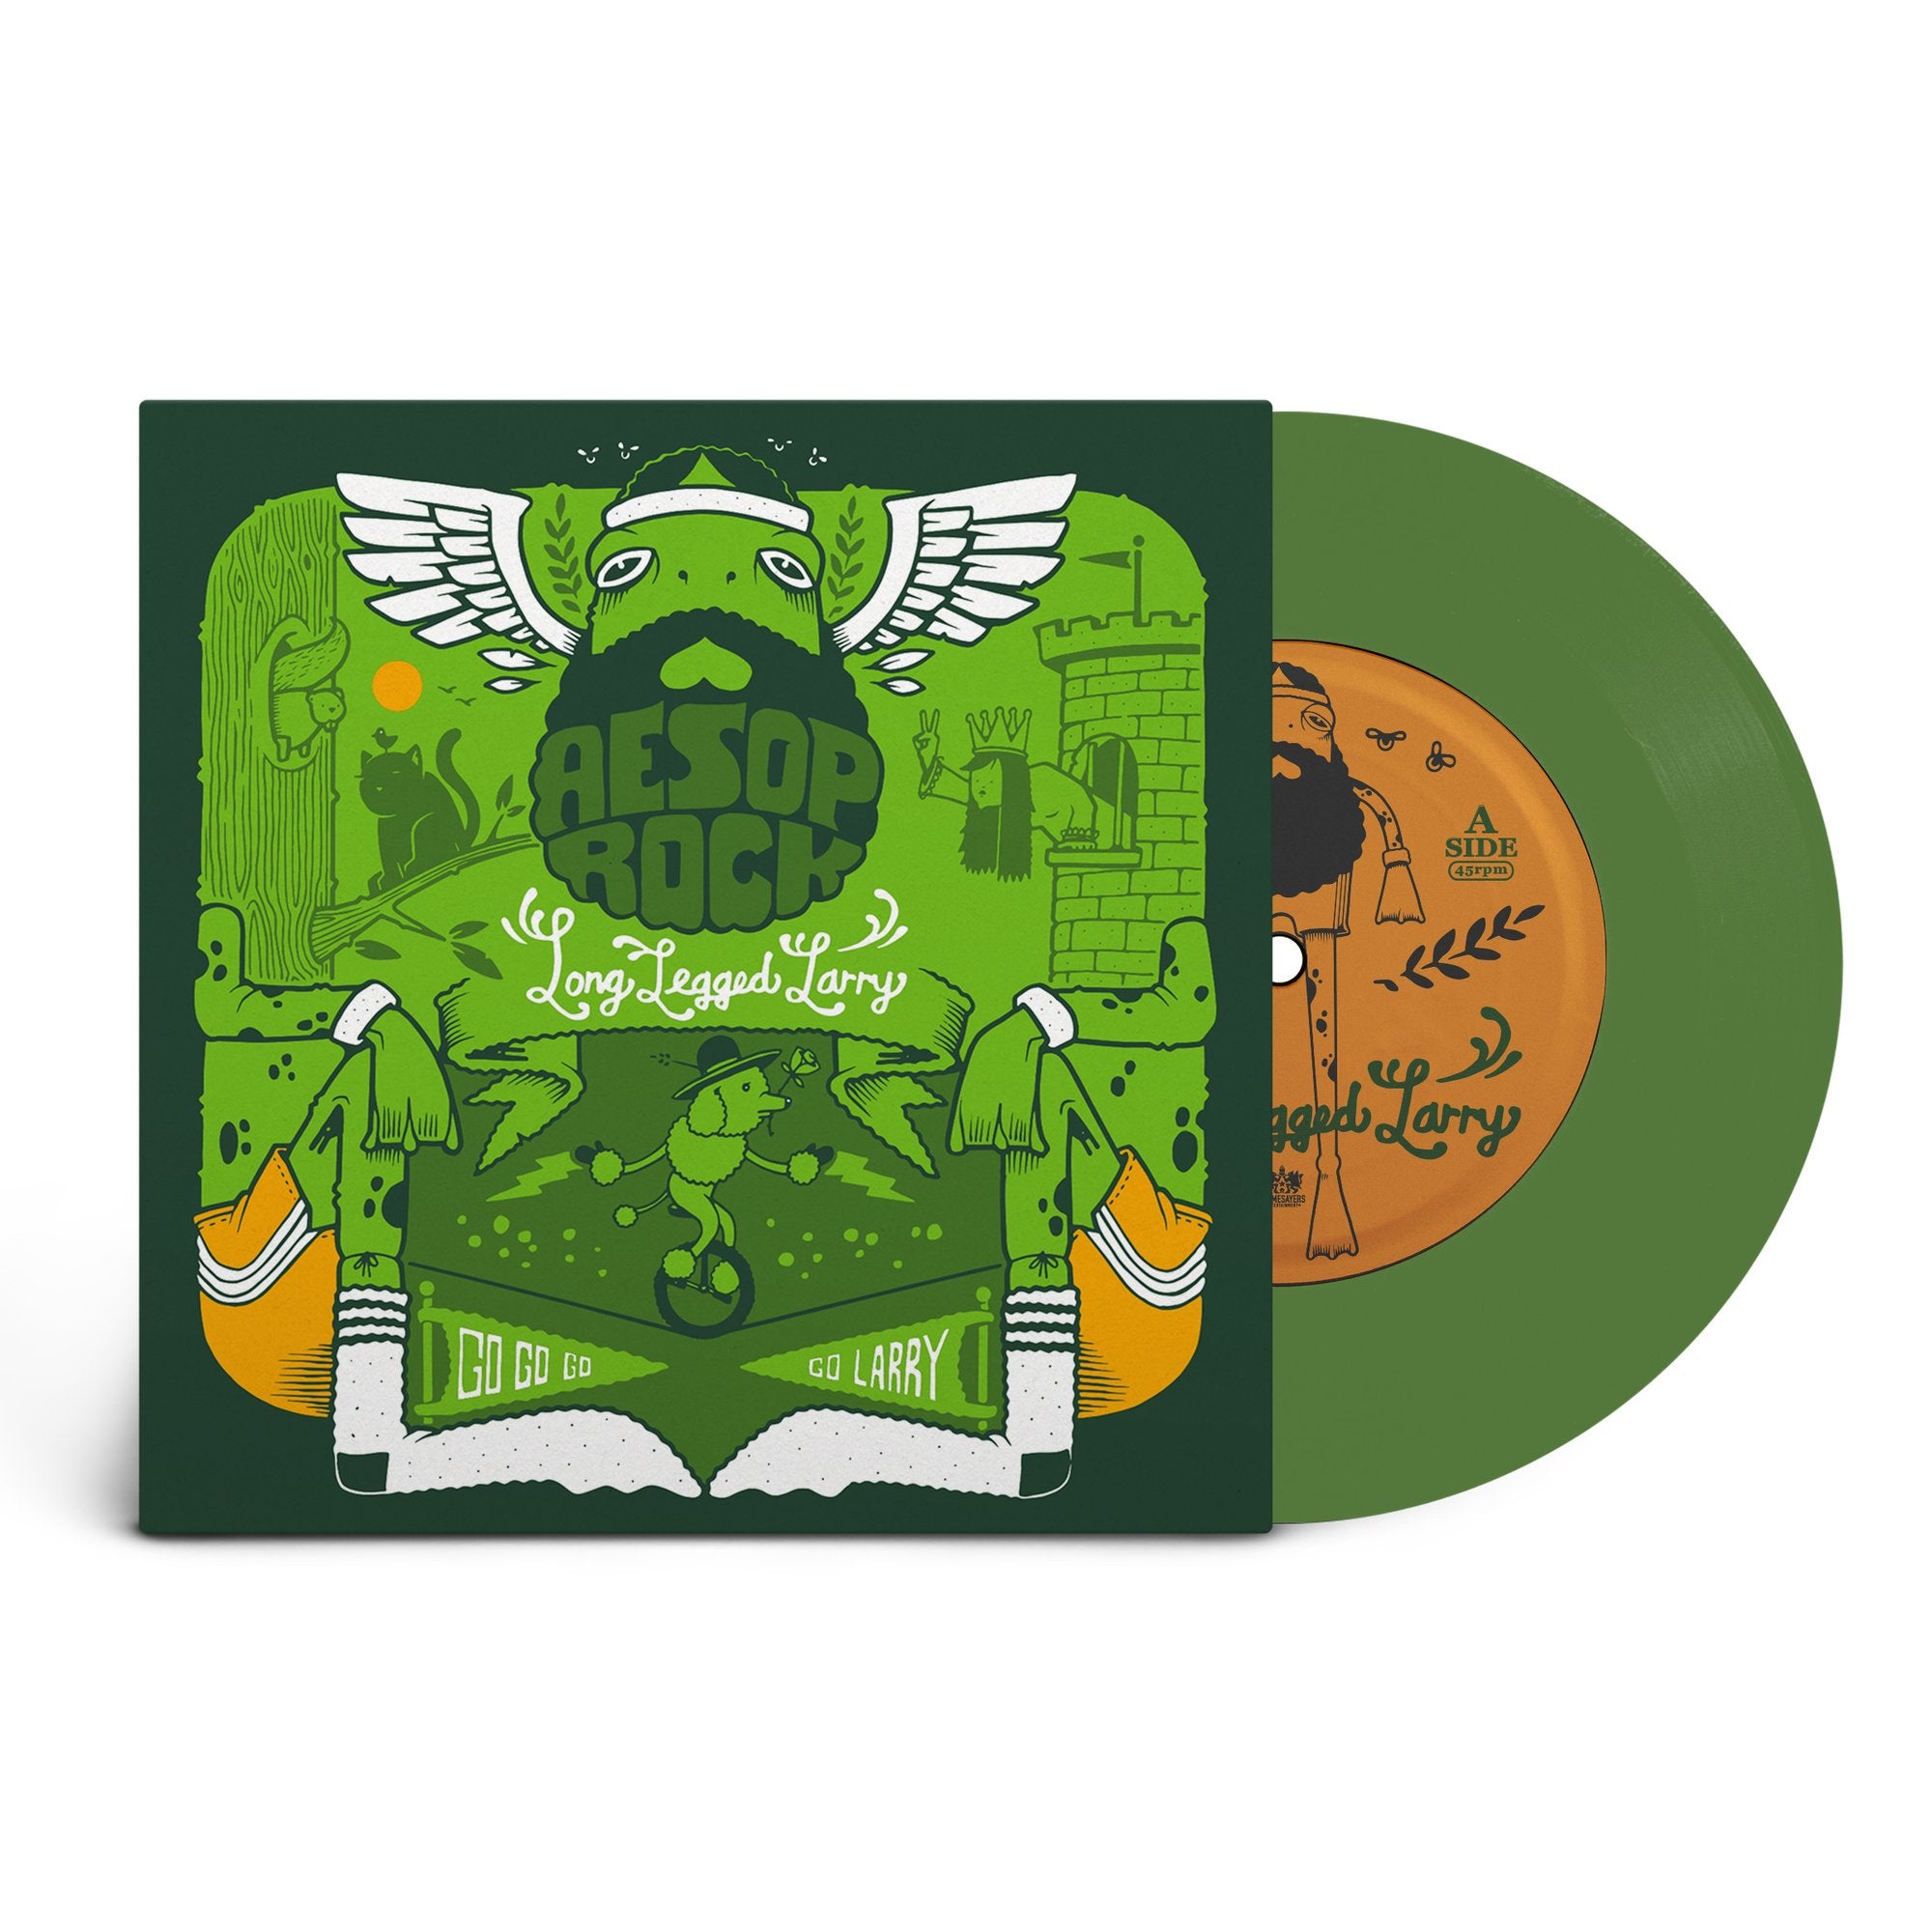 AESOP ROCK - Long Legged Larry - 7" - Limited Green Vinyl